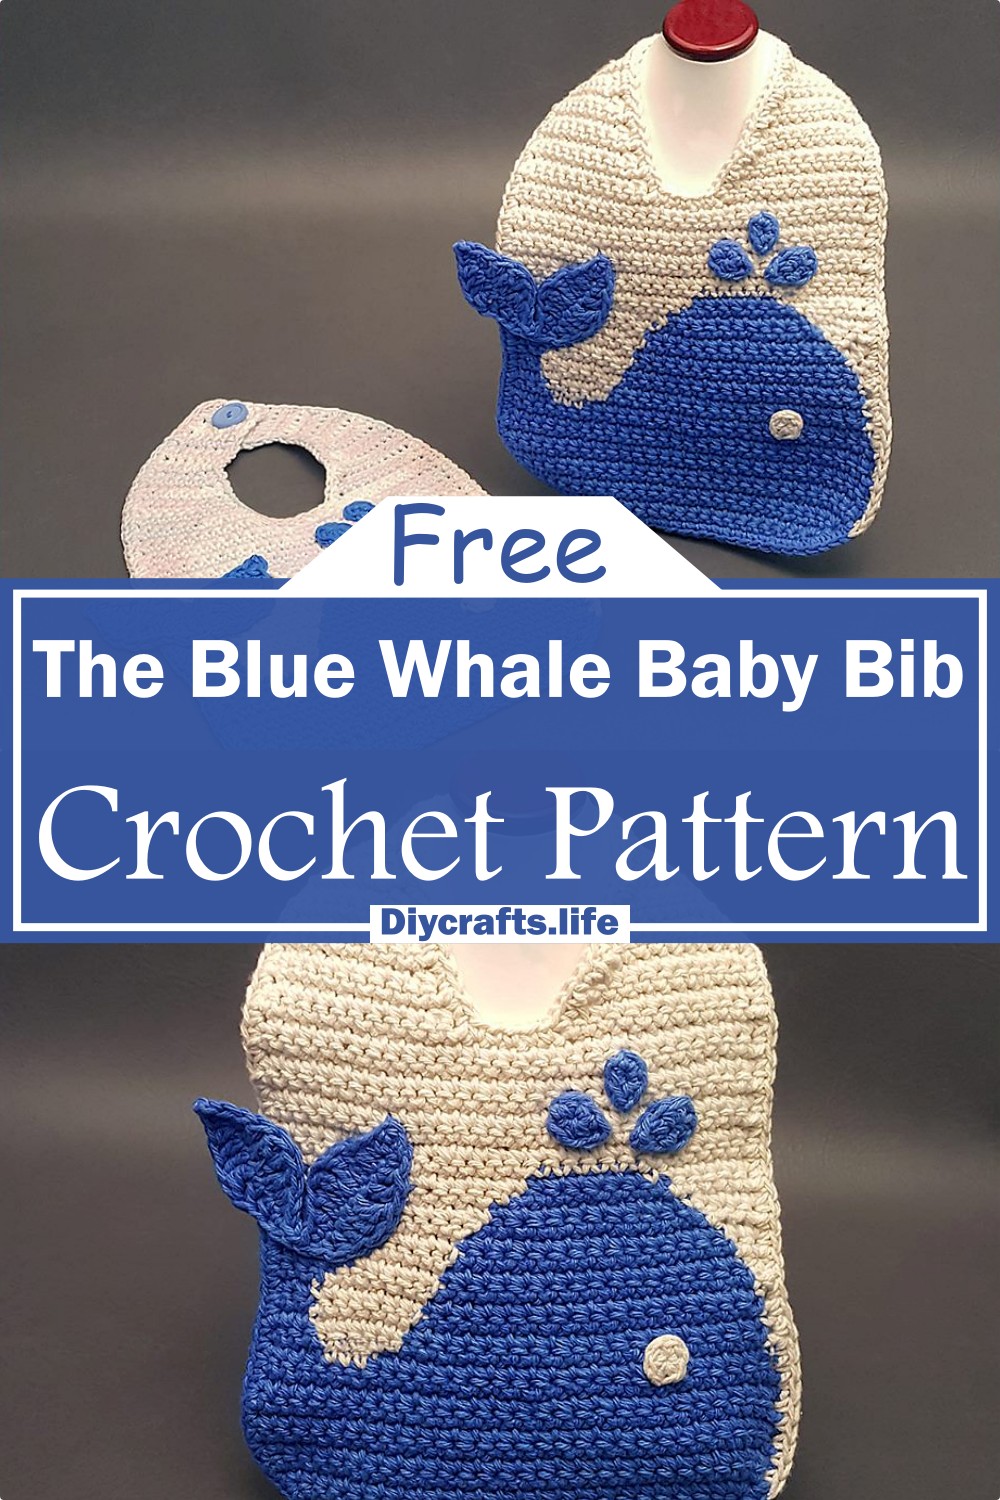 The Blue Whale Baby Bib